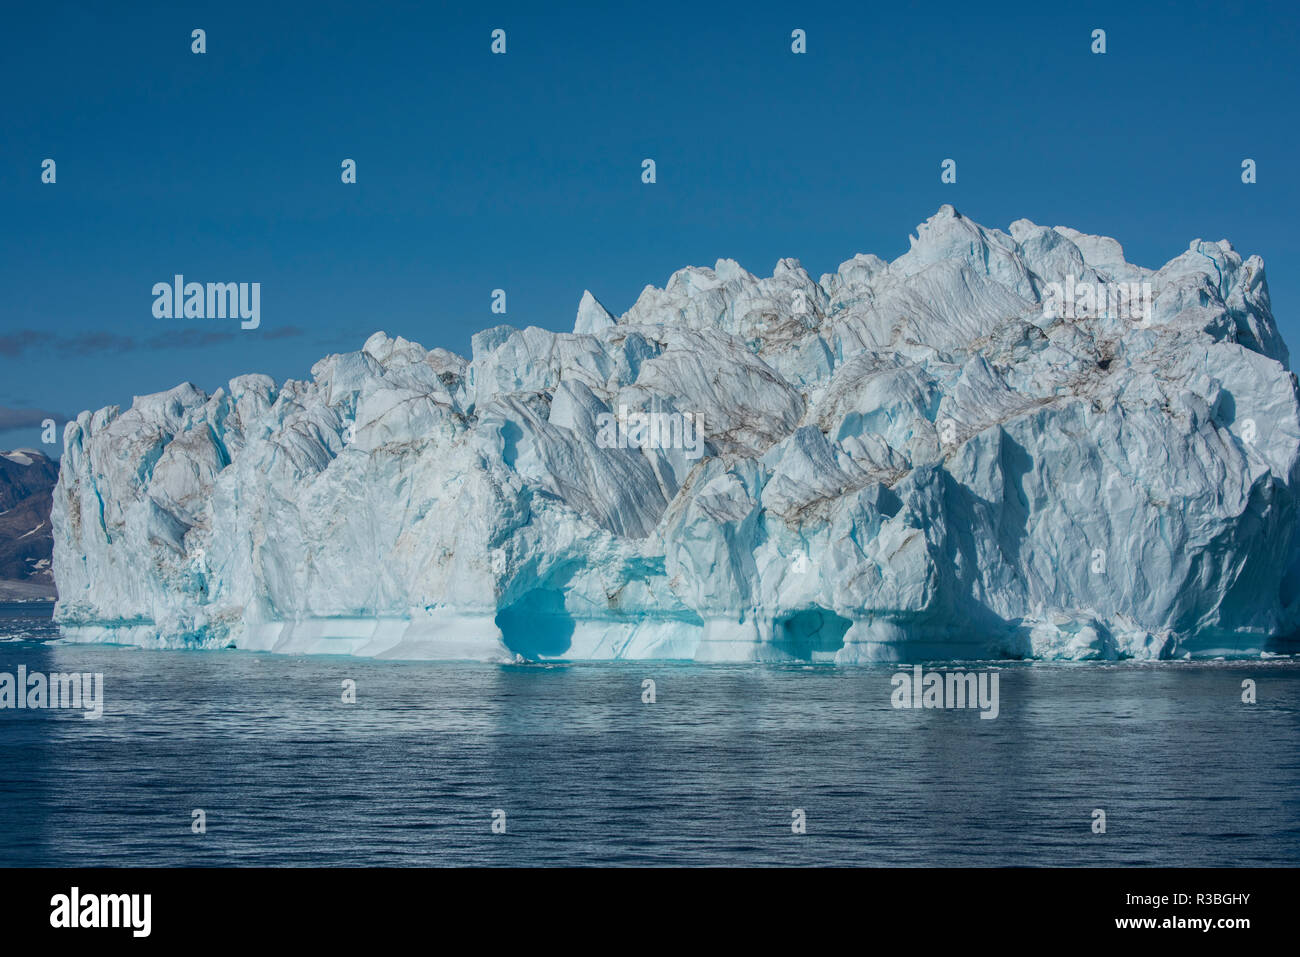 La Groenlandia, Scoresbysund, aka Scoresby Sund, Nordvestfjord. Enormi iceberg galleggianti nel fiordo di calma. Foto Stock